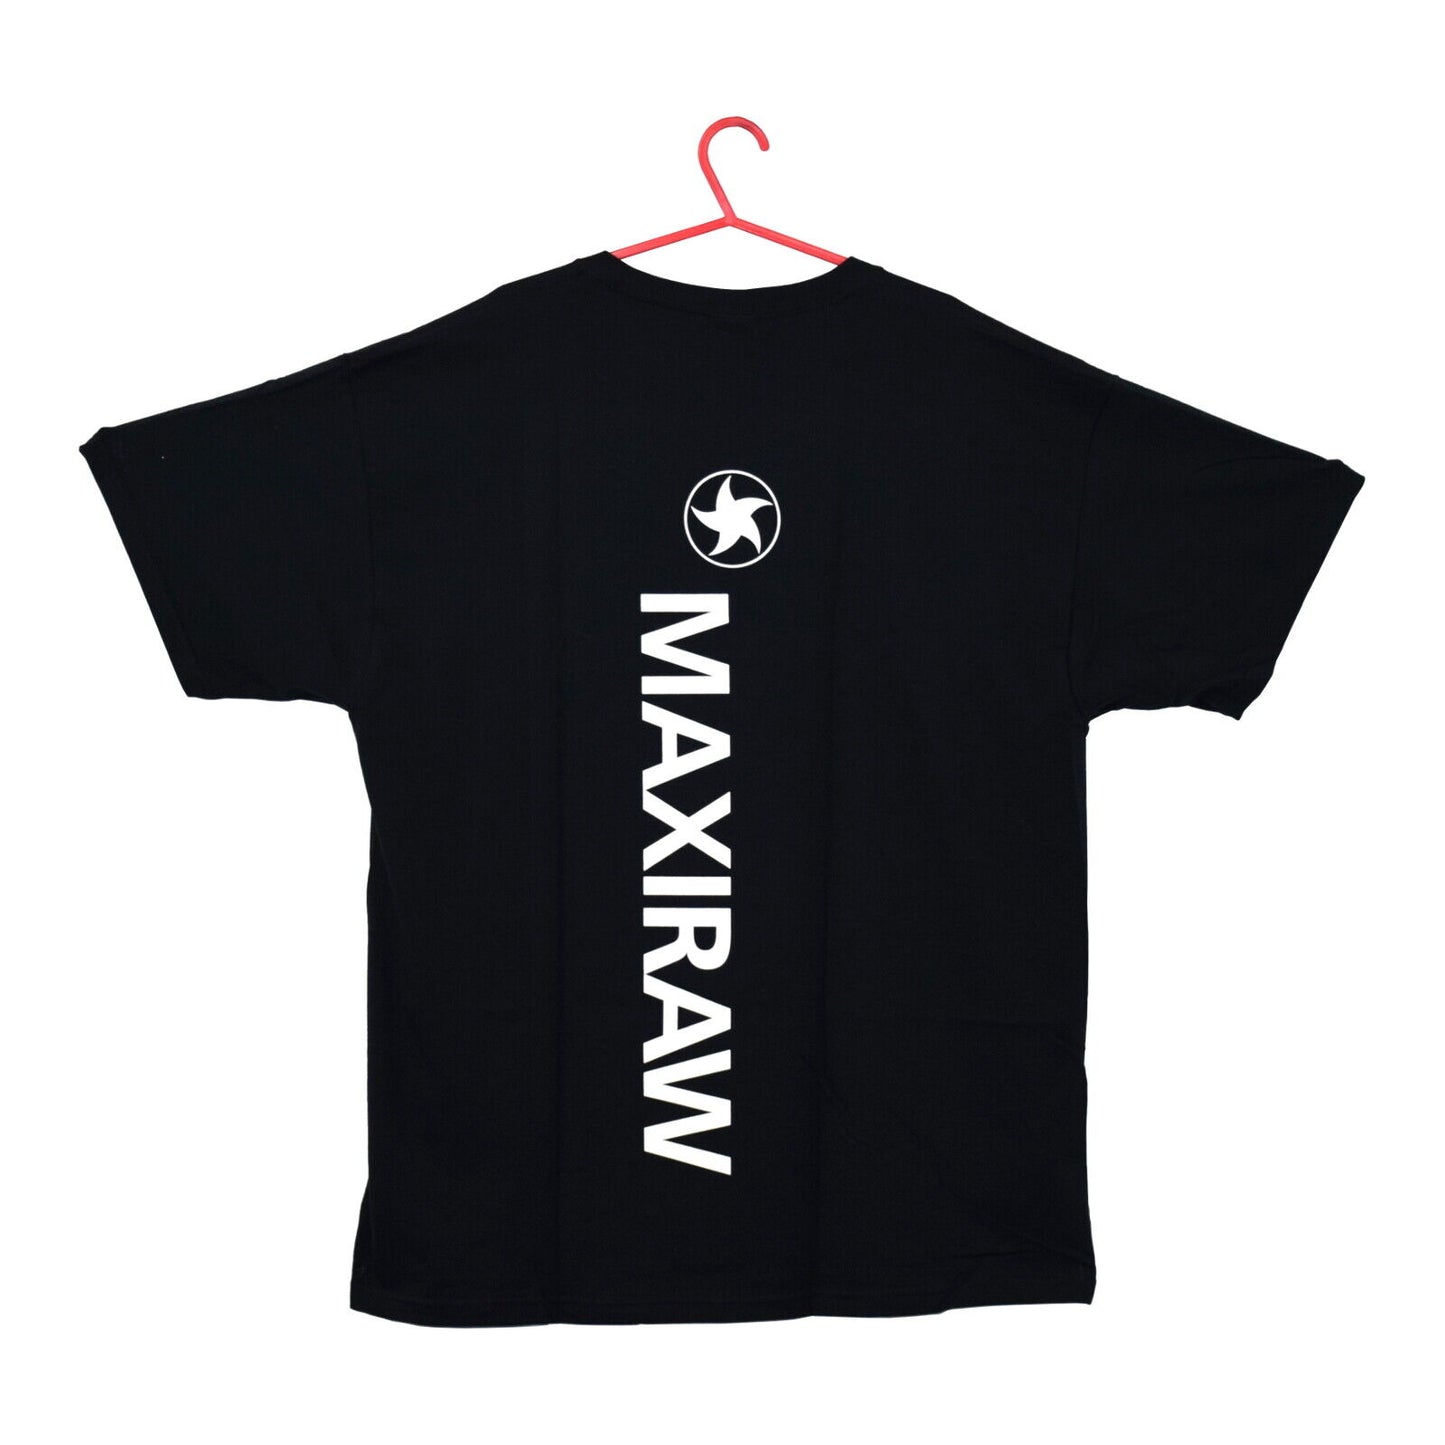 Maxi-Muscle MaxiNutrition Gym T-Shirt - Star - Black - XL